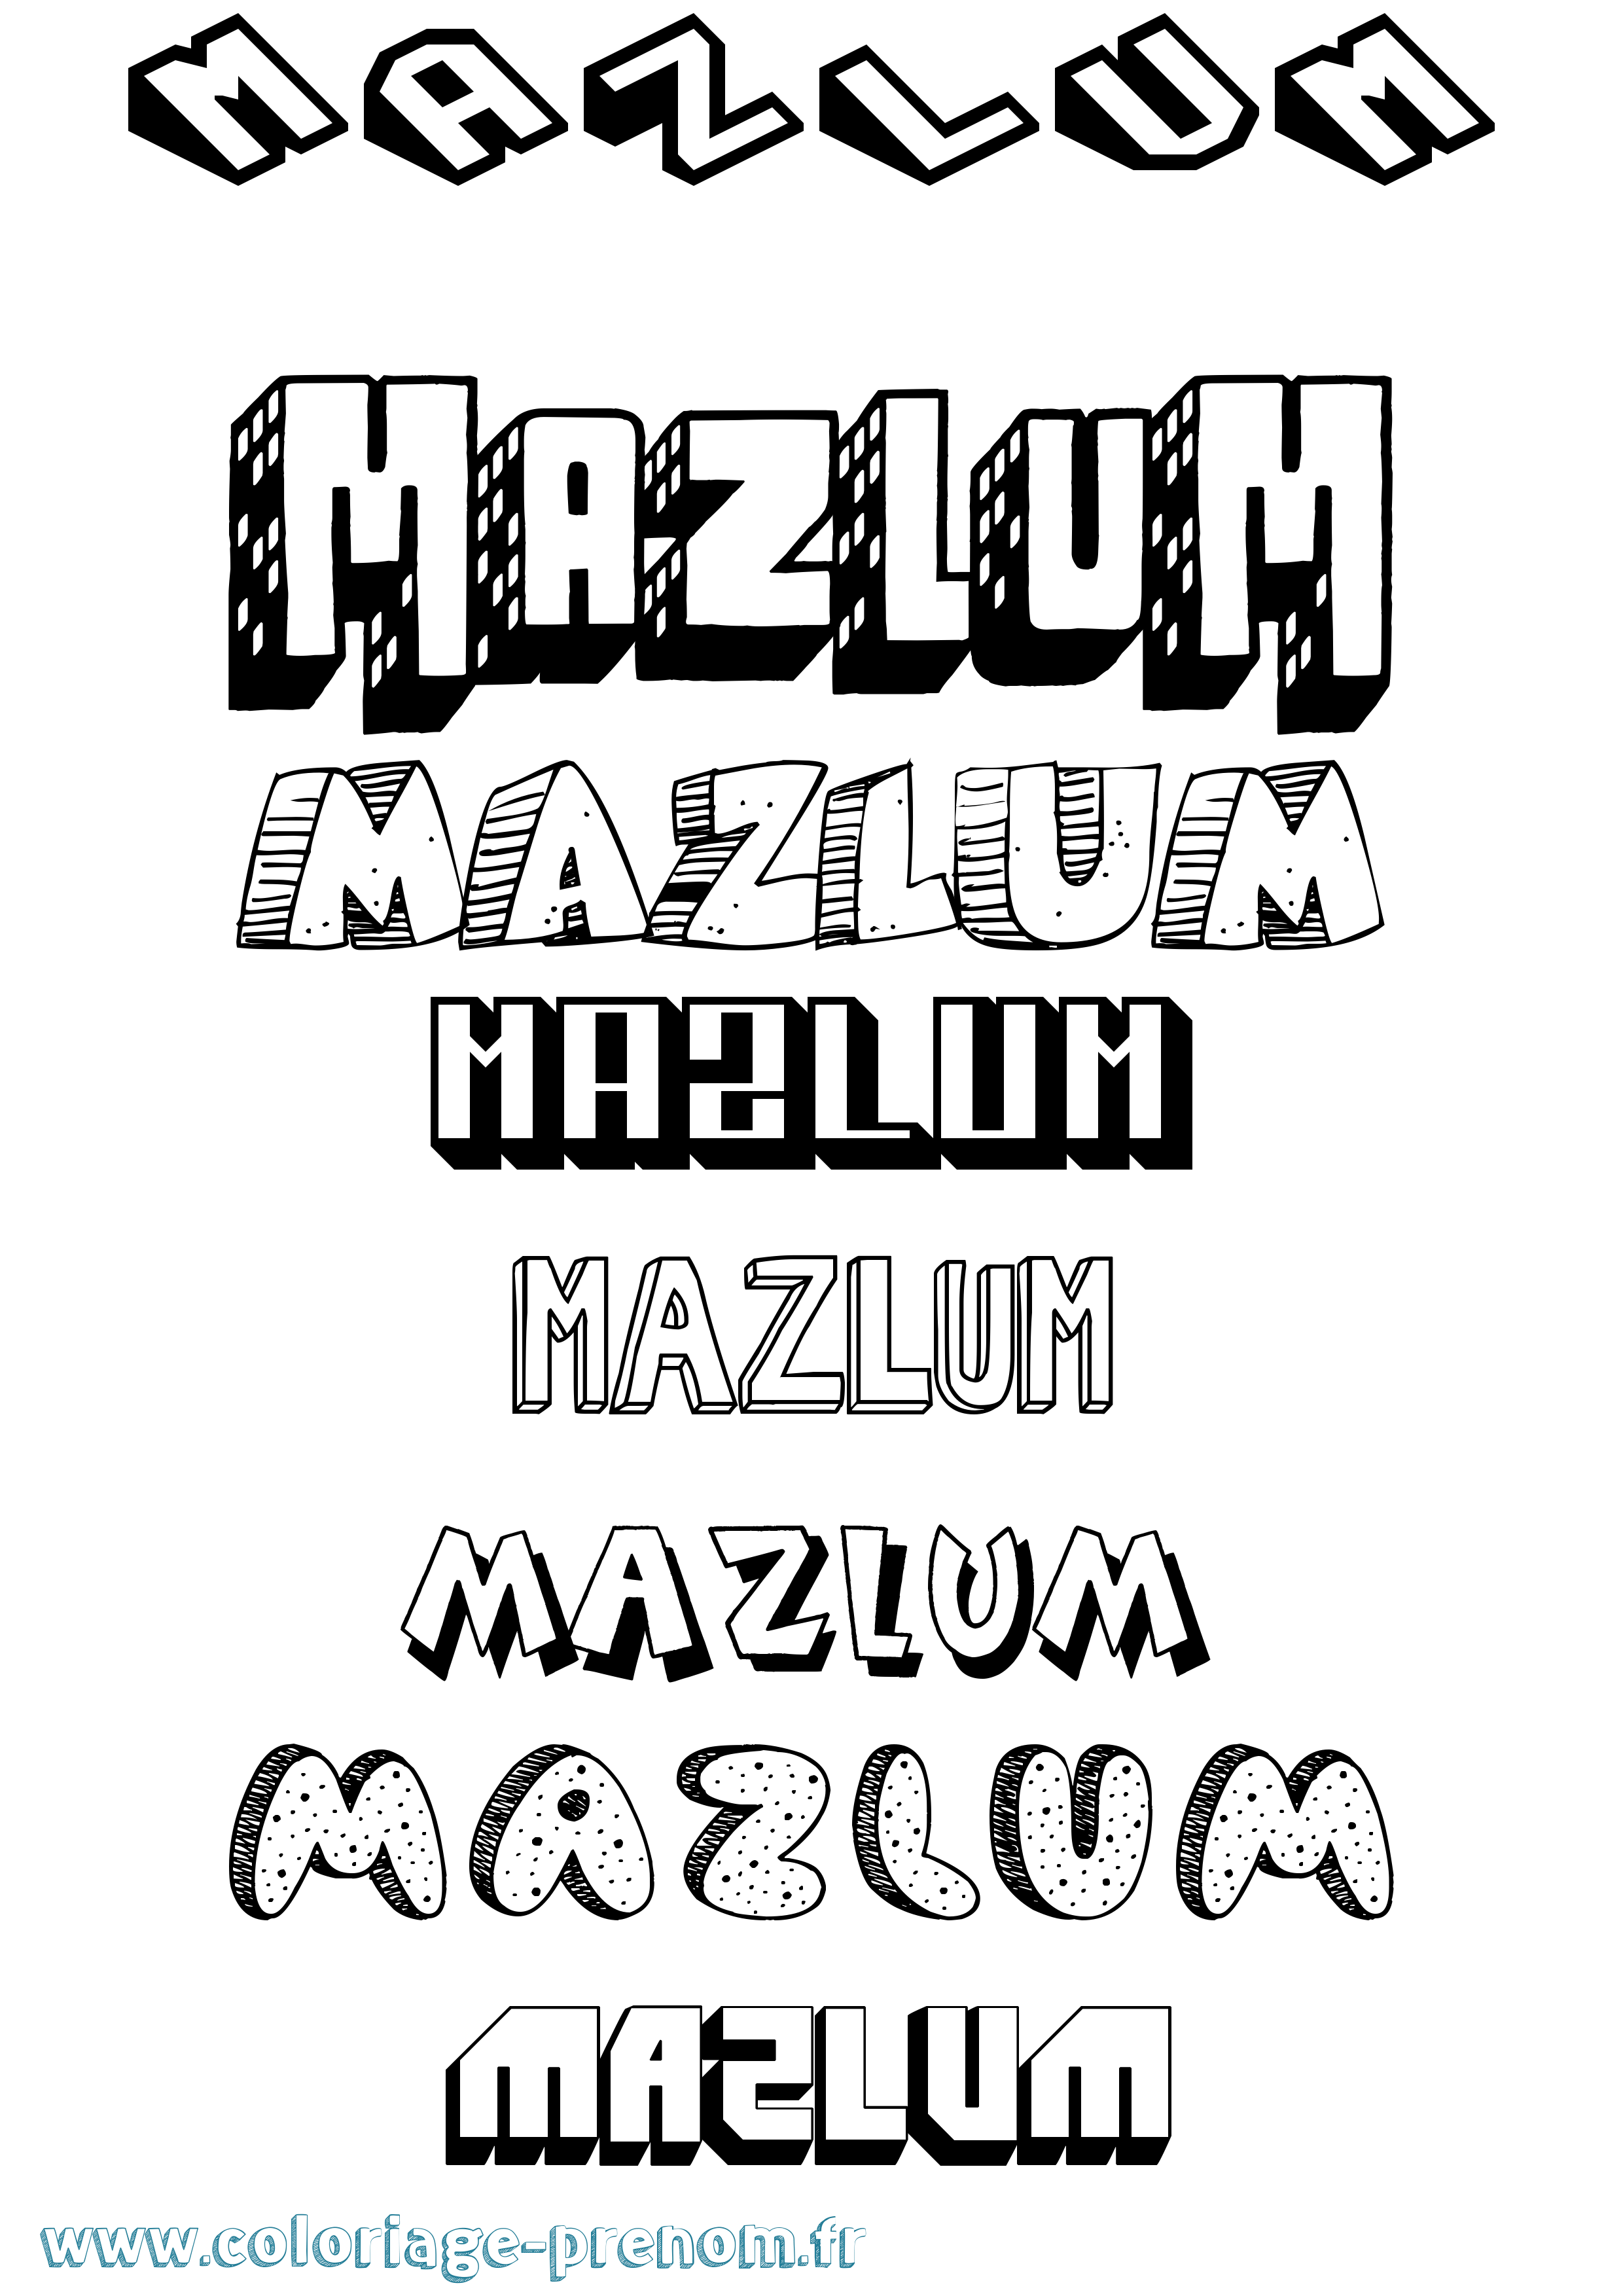 Coloriage prénom Mazlum Effet 3D